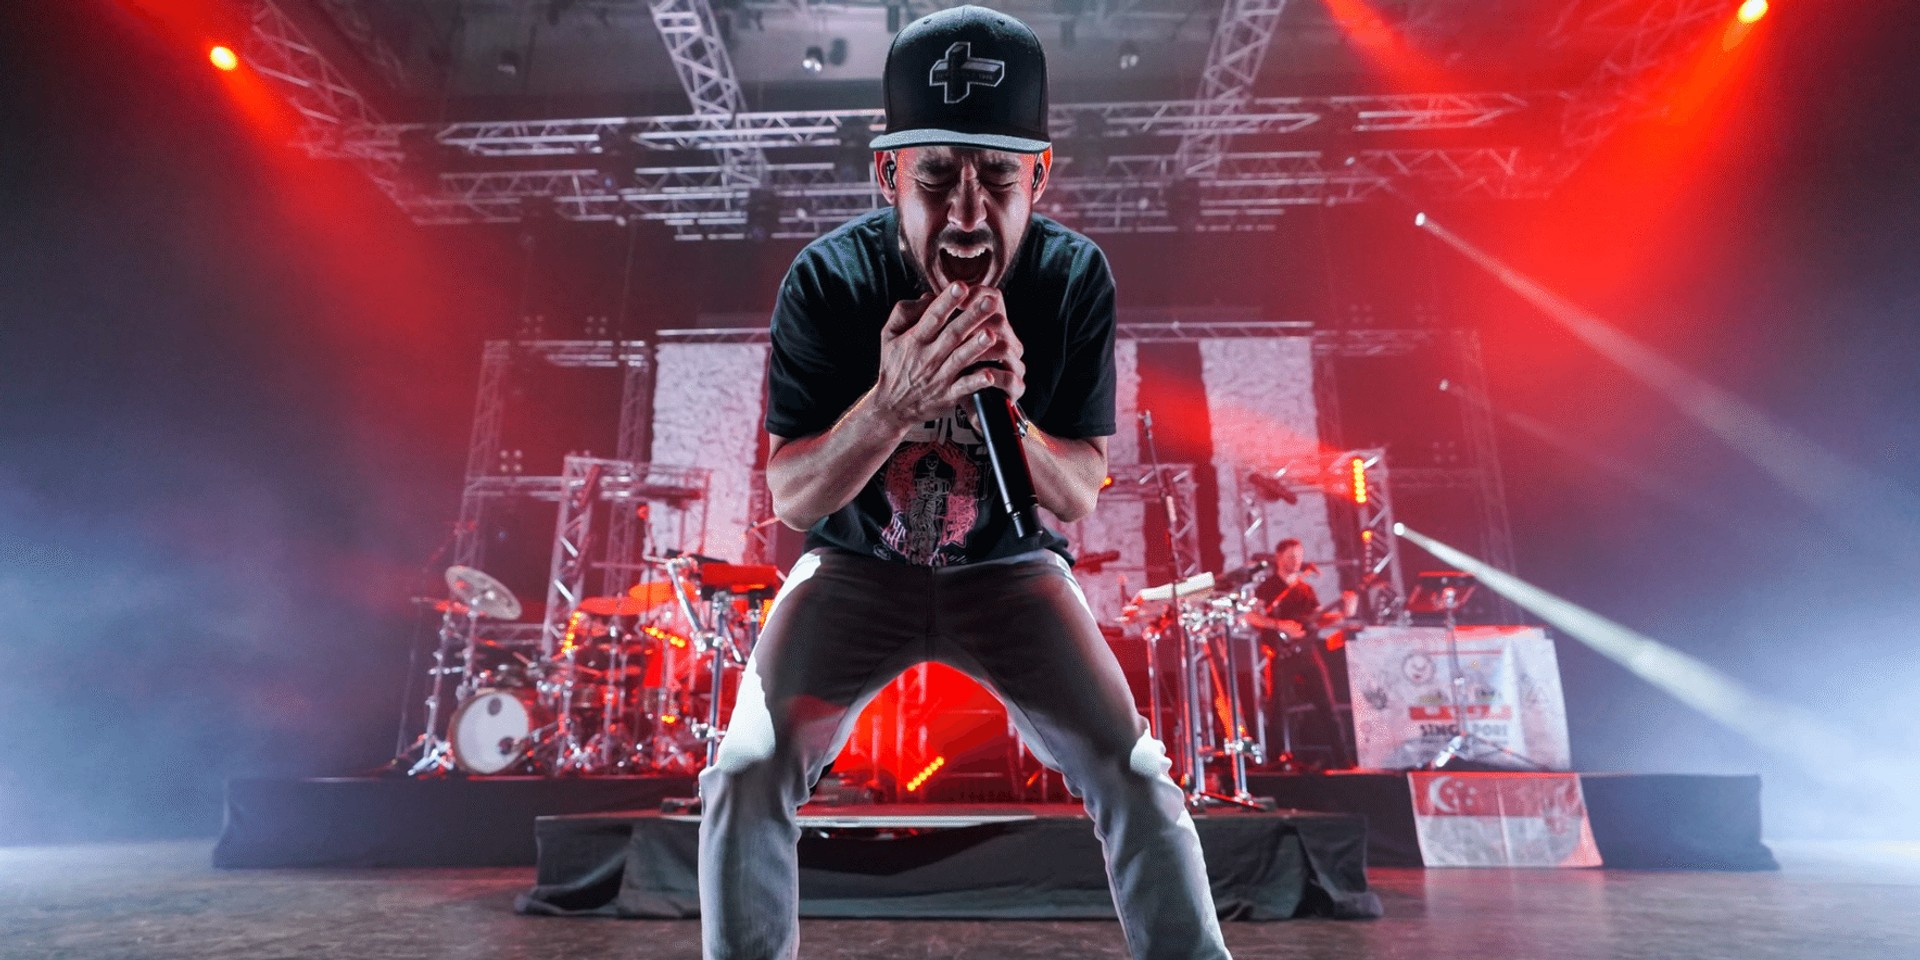 Mike Shinoda brought catharsis to Singapore – gig report